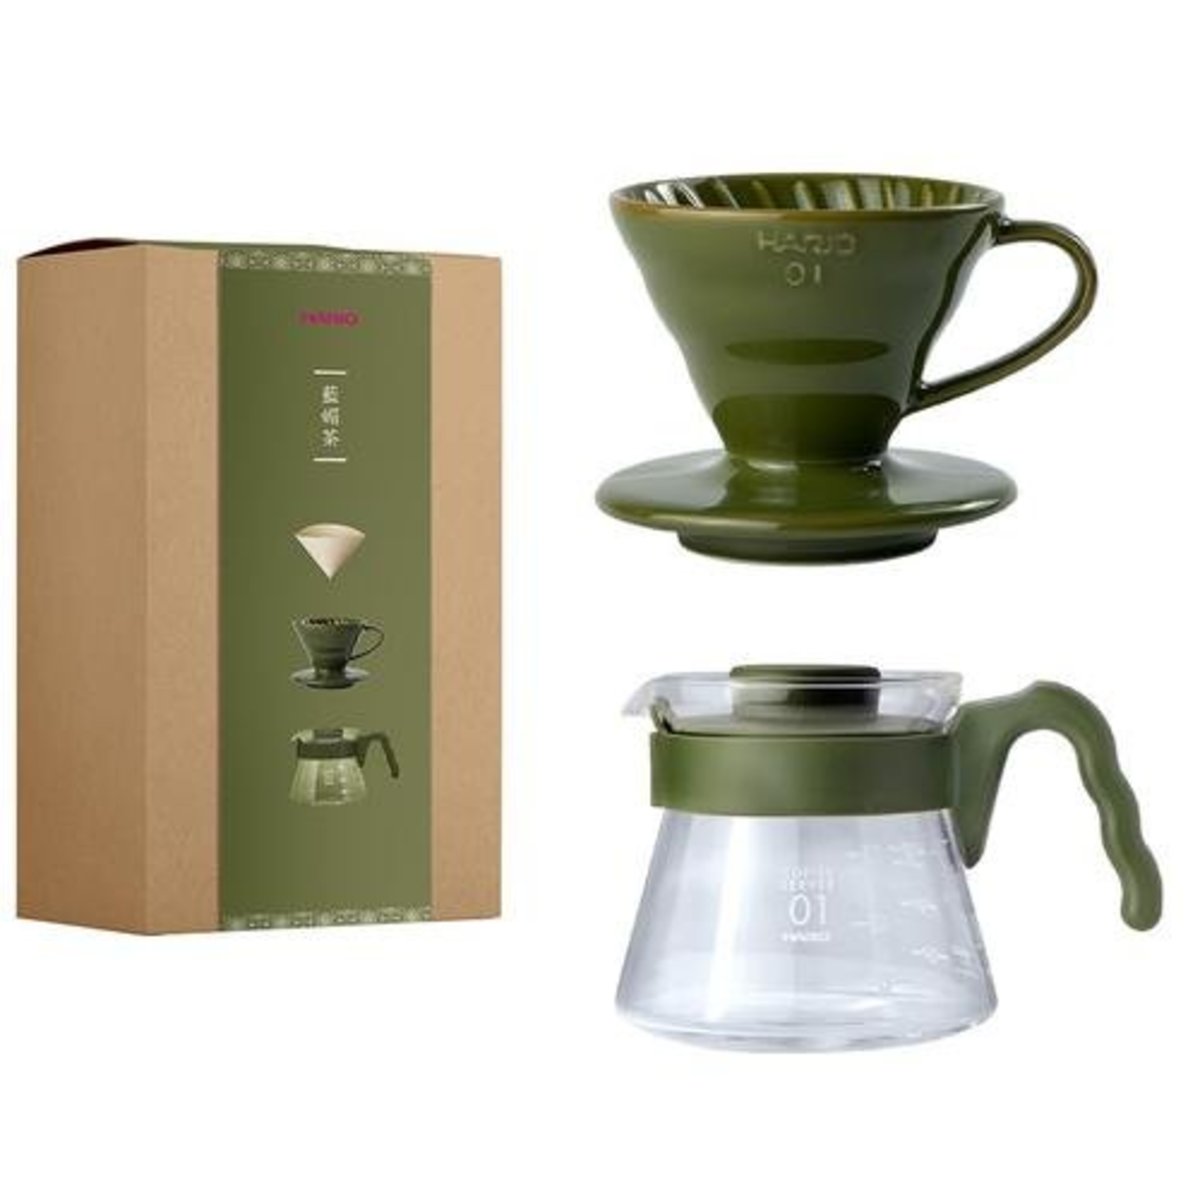 Hario - V60 Ceramic Filter Cup Coffee Maker Set (1-2 Cups) - Lanmei Brown 01